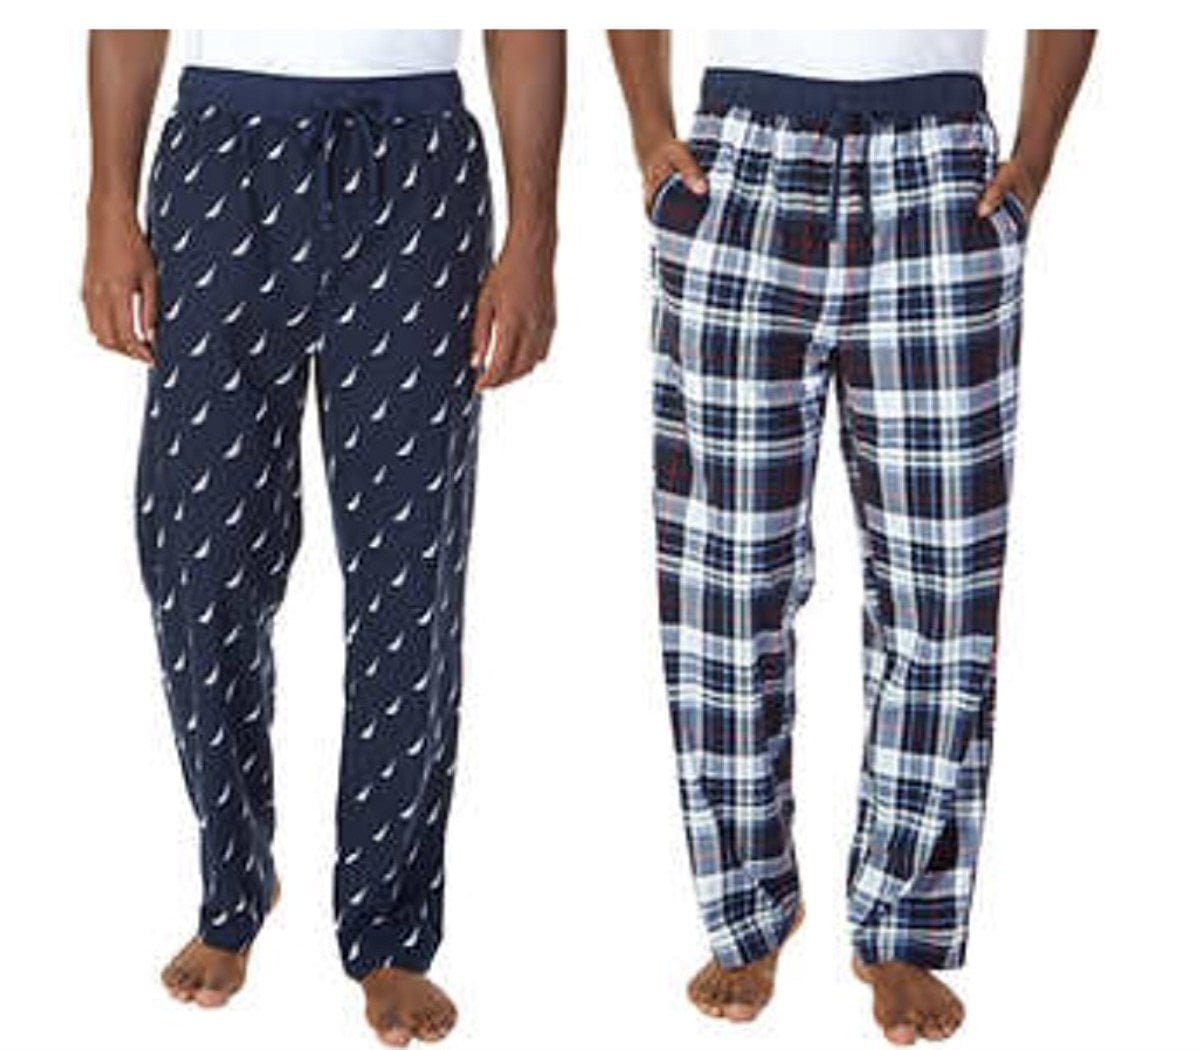 Nautica Men's 2-Pack Comfort Waistband Fleece Sleepwear Pants Variety NEW! 